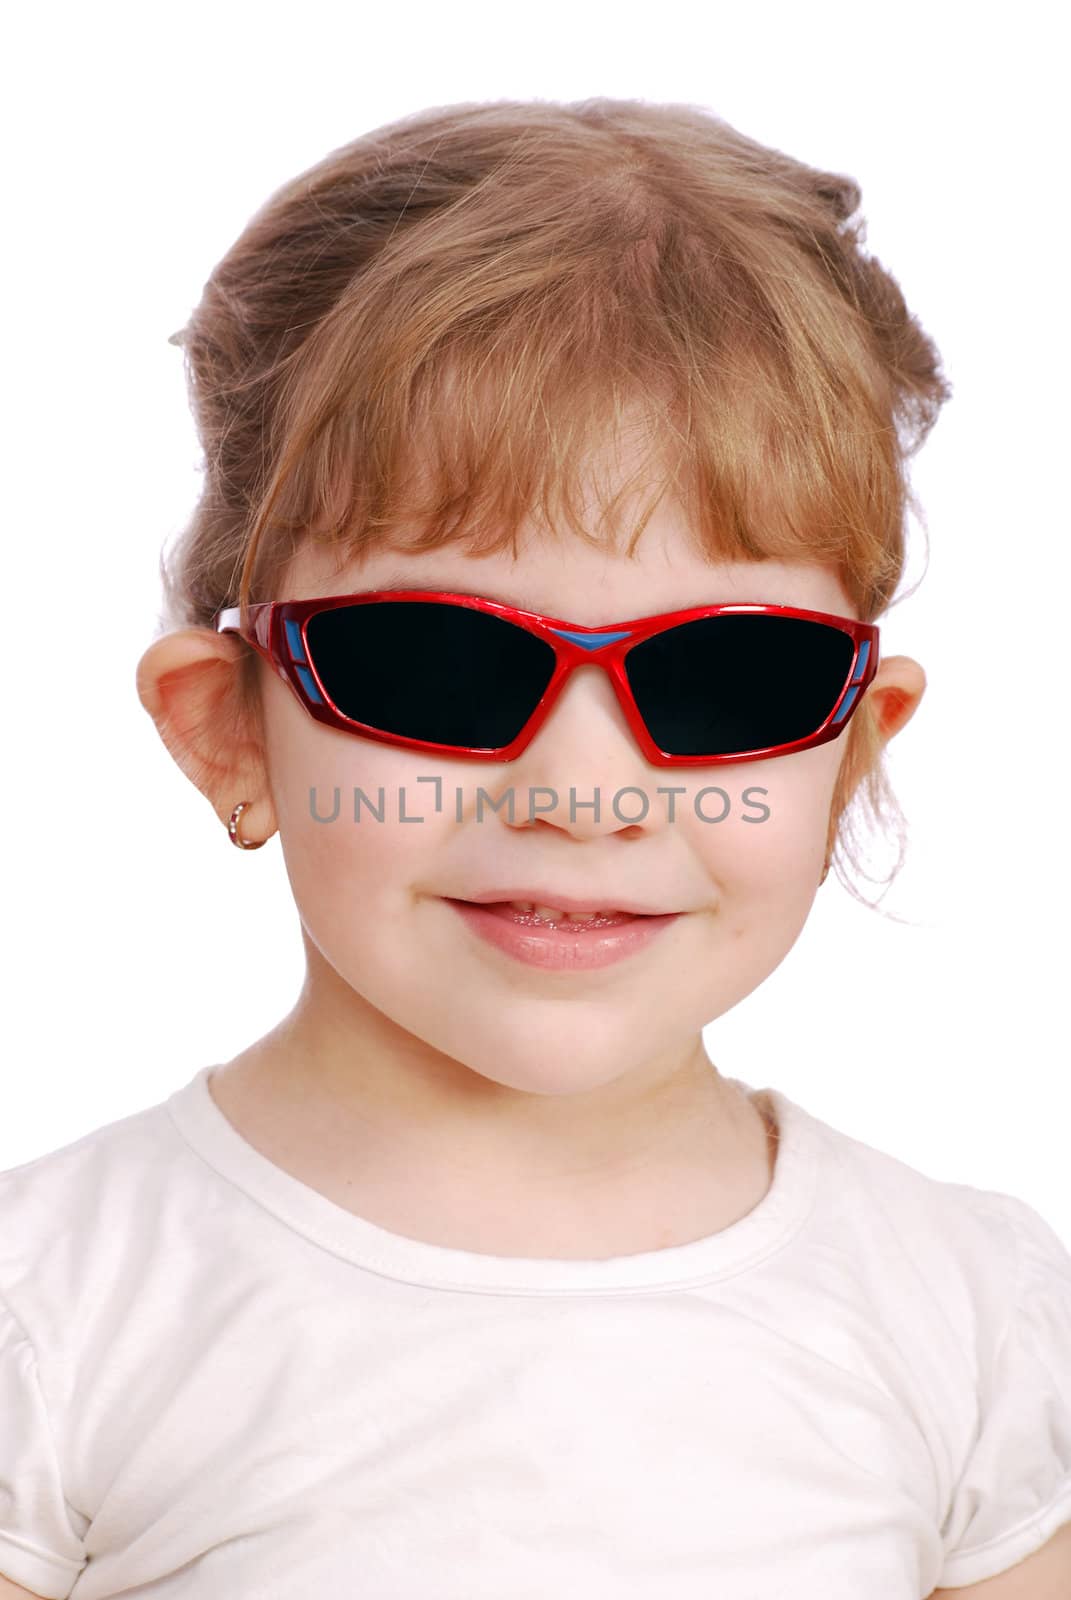 Little girl with sunglasses studio shot